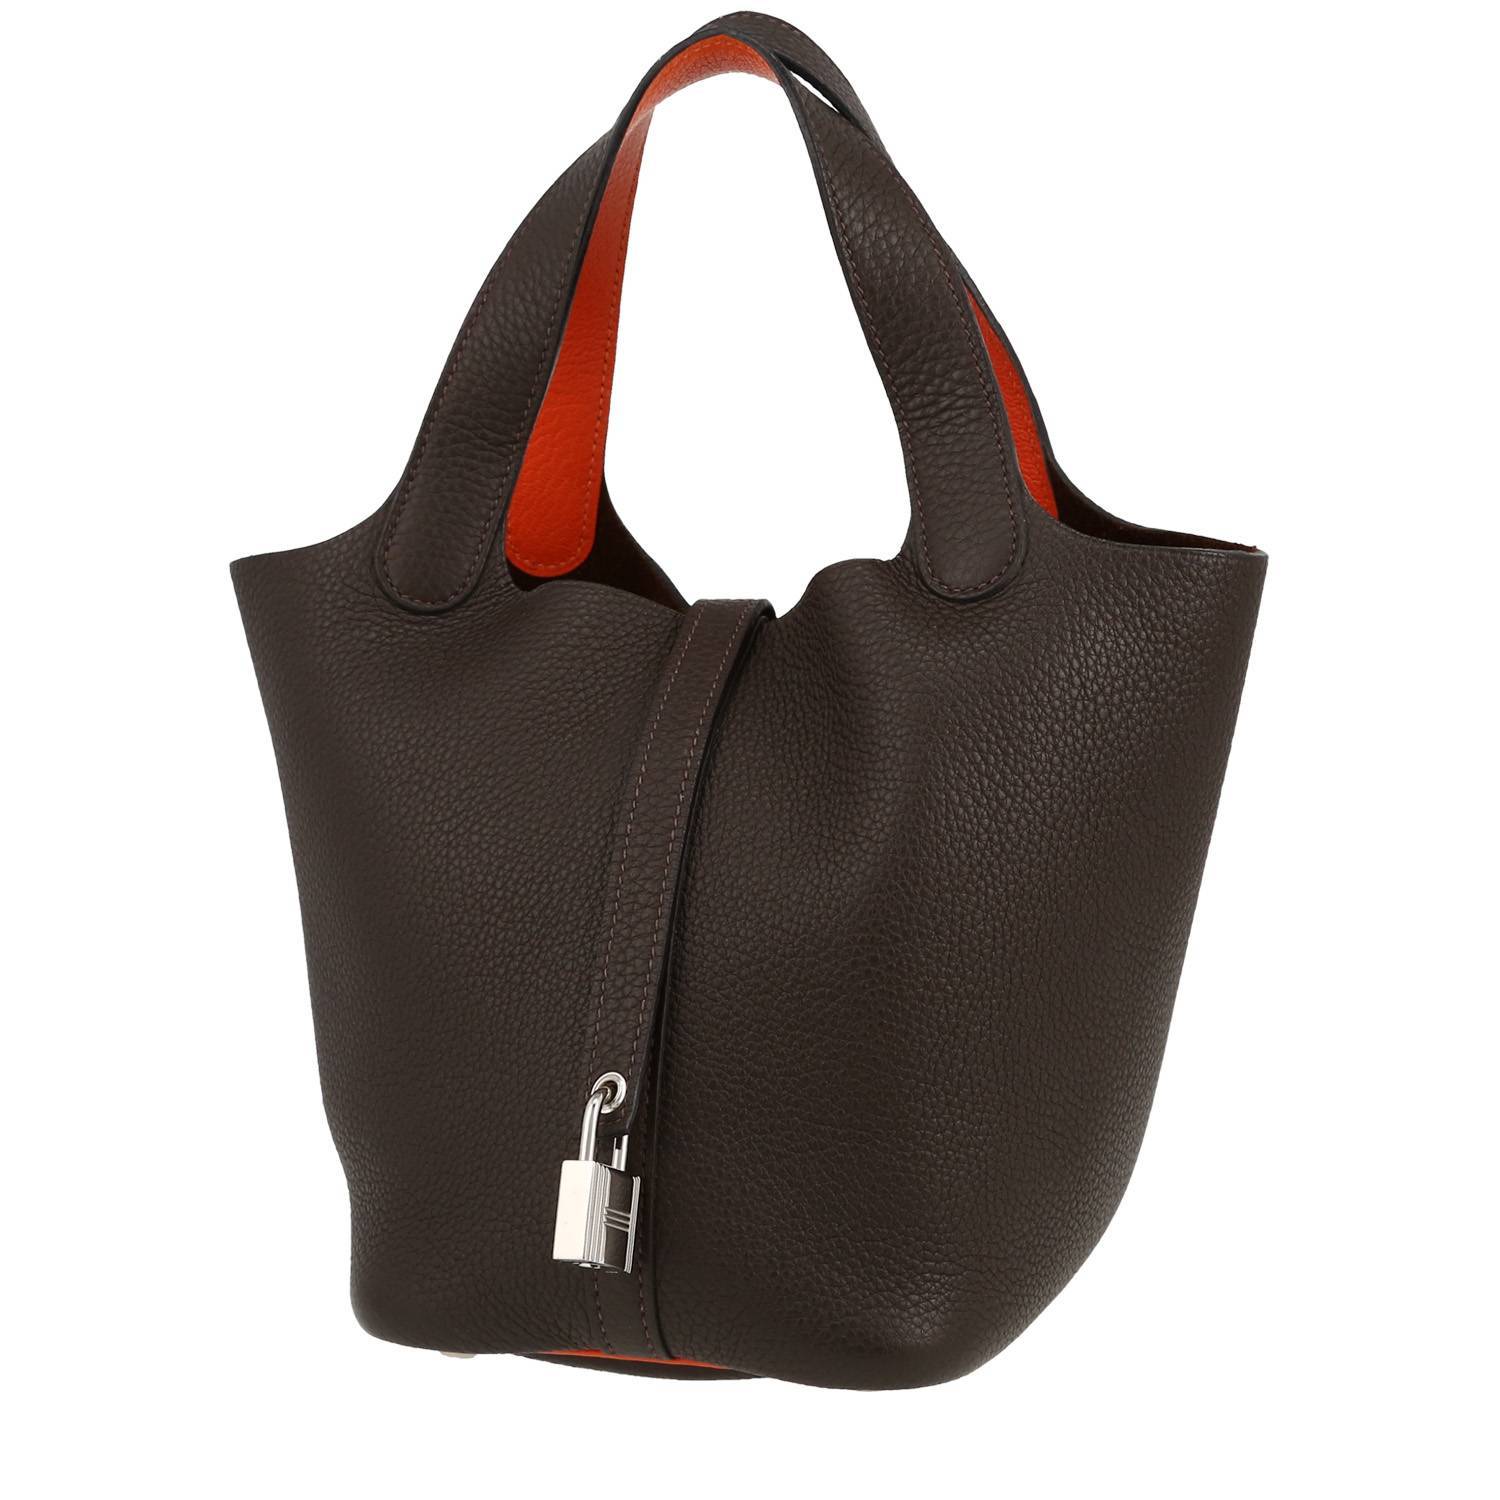 Picotin Handbag In Brown And Orange Leather Taurillon